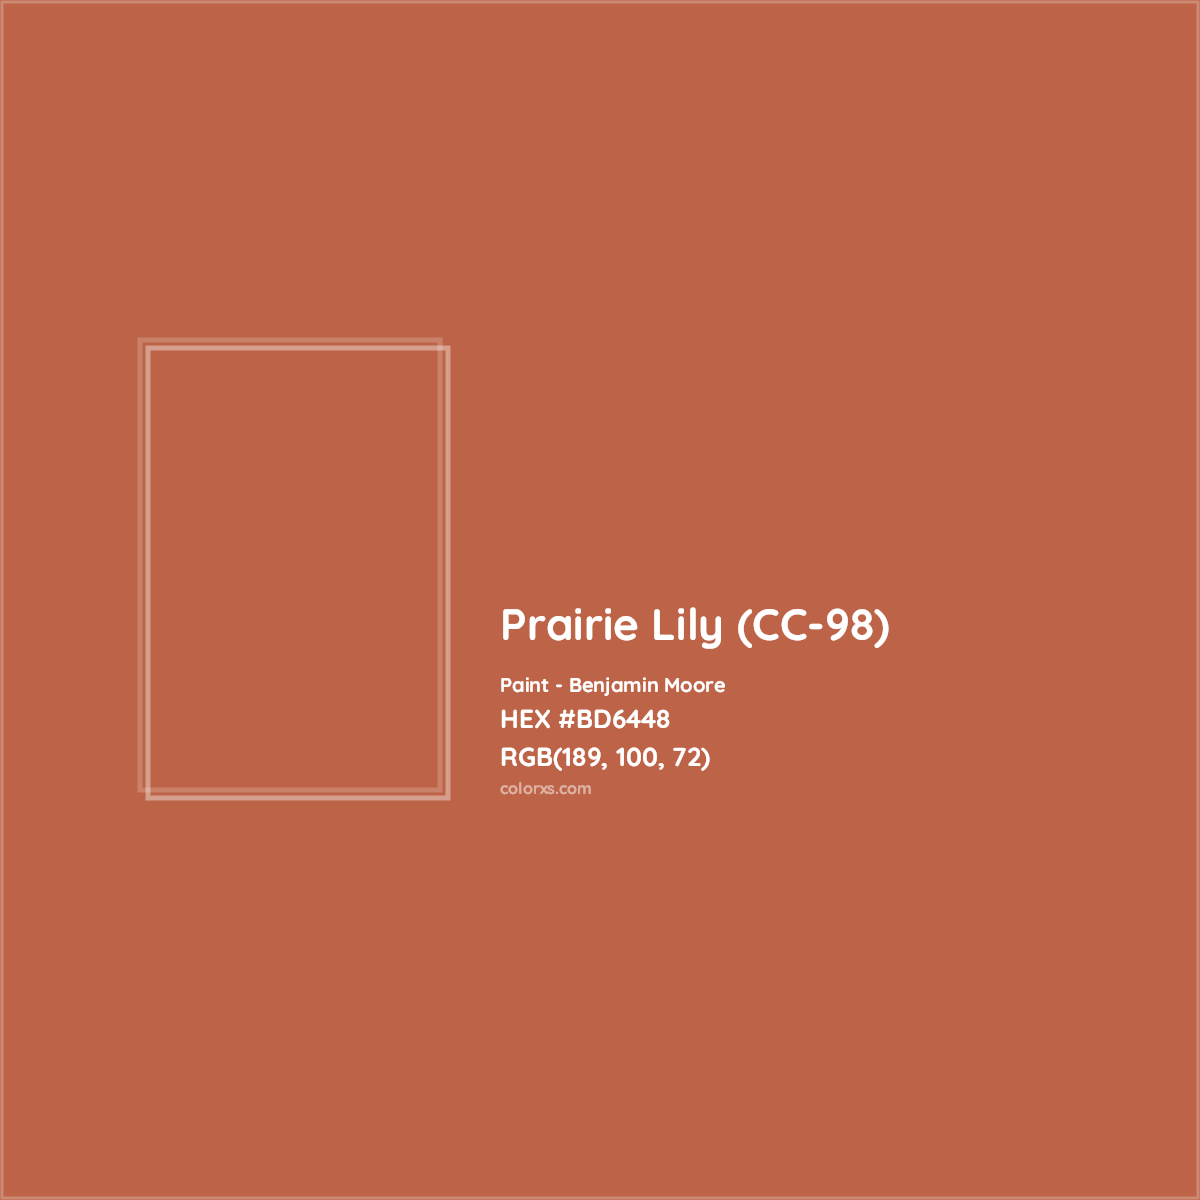 HEX #BD6448 Prairie Lily (CC-98) Paint Benjamin Moore - Color Code